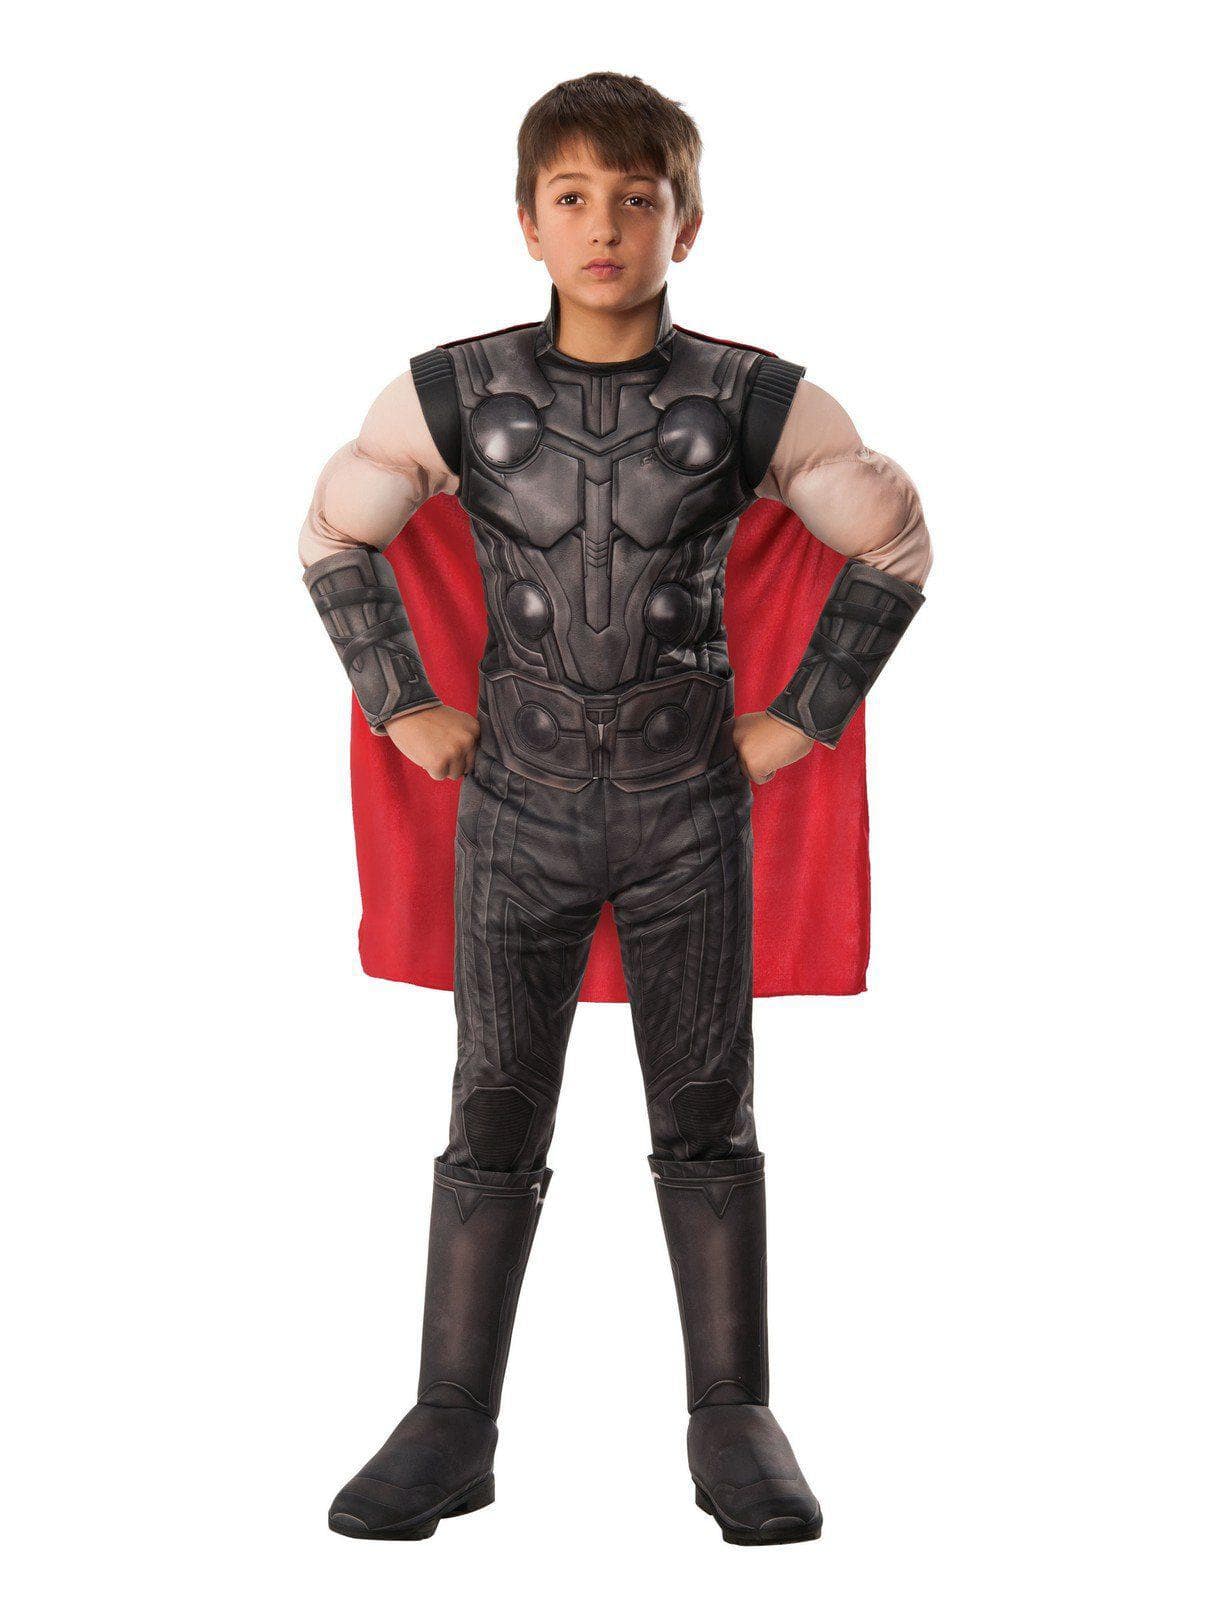 Kids Avengers Thor Deluxe Costume - costumes.com